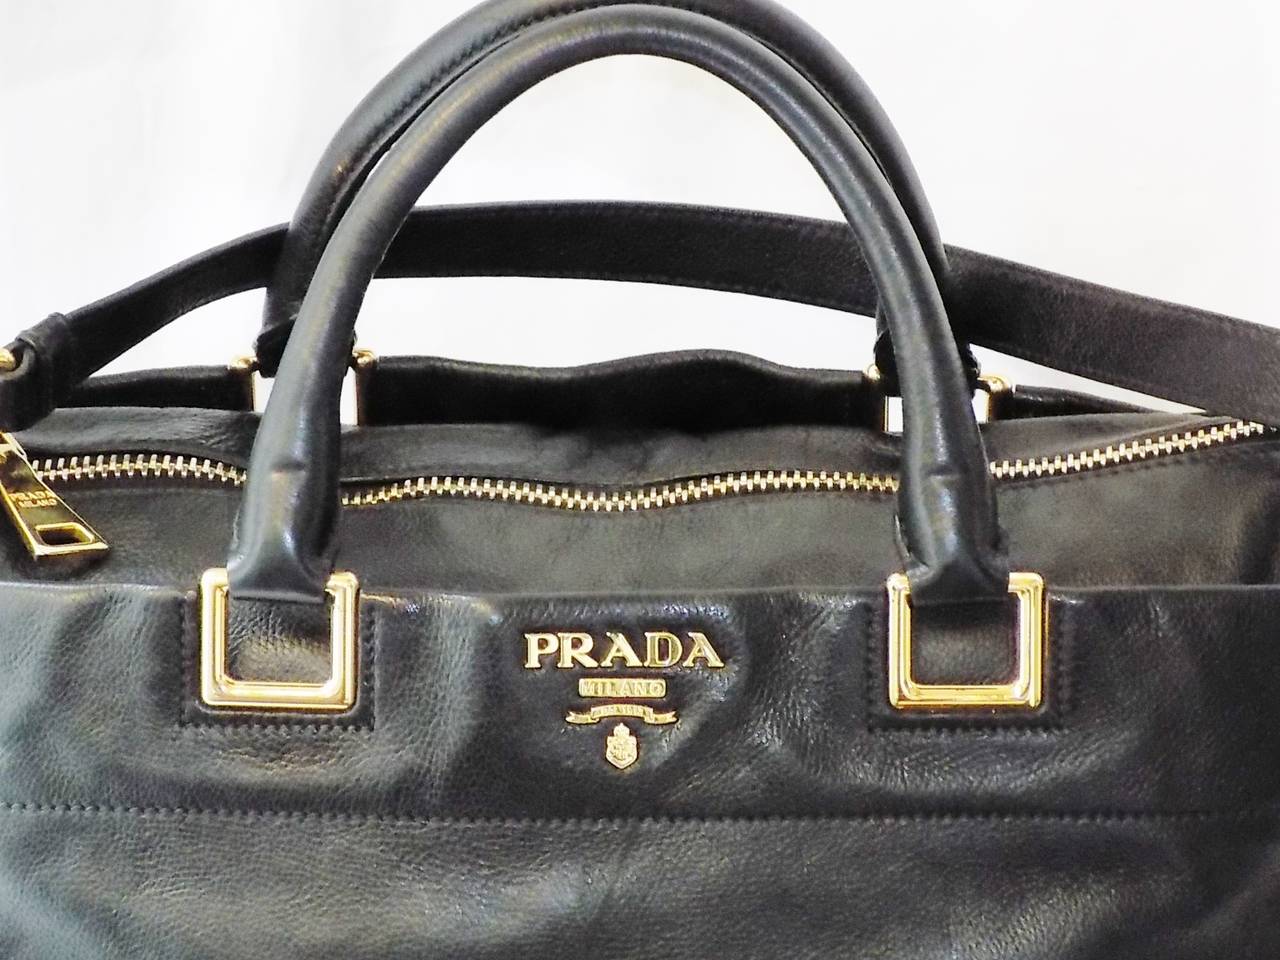 PRADA Executive Black soft leather Tote Bag 3